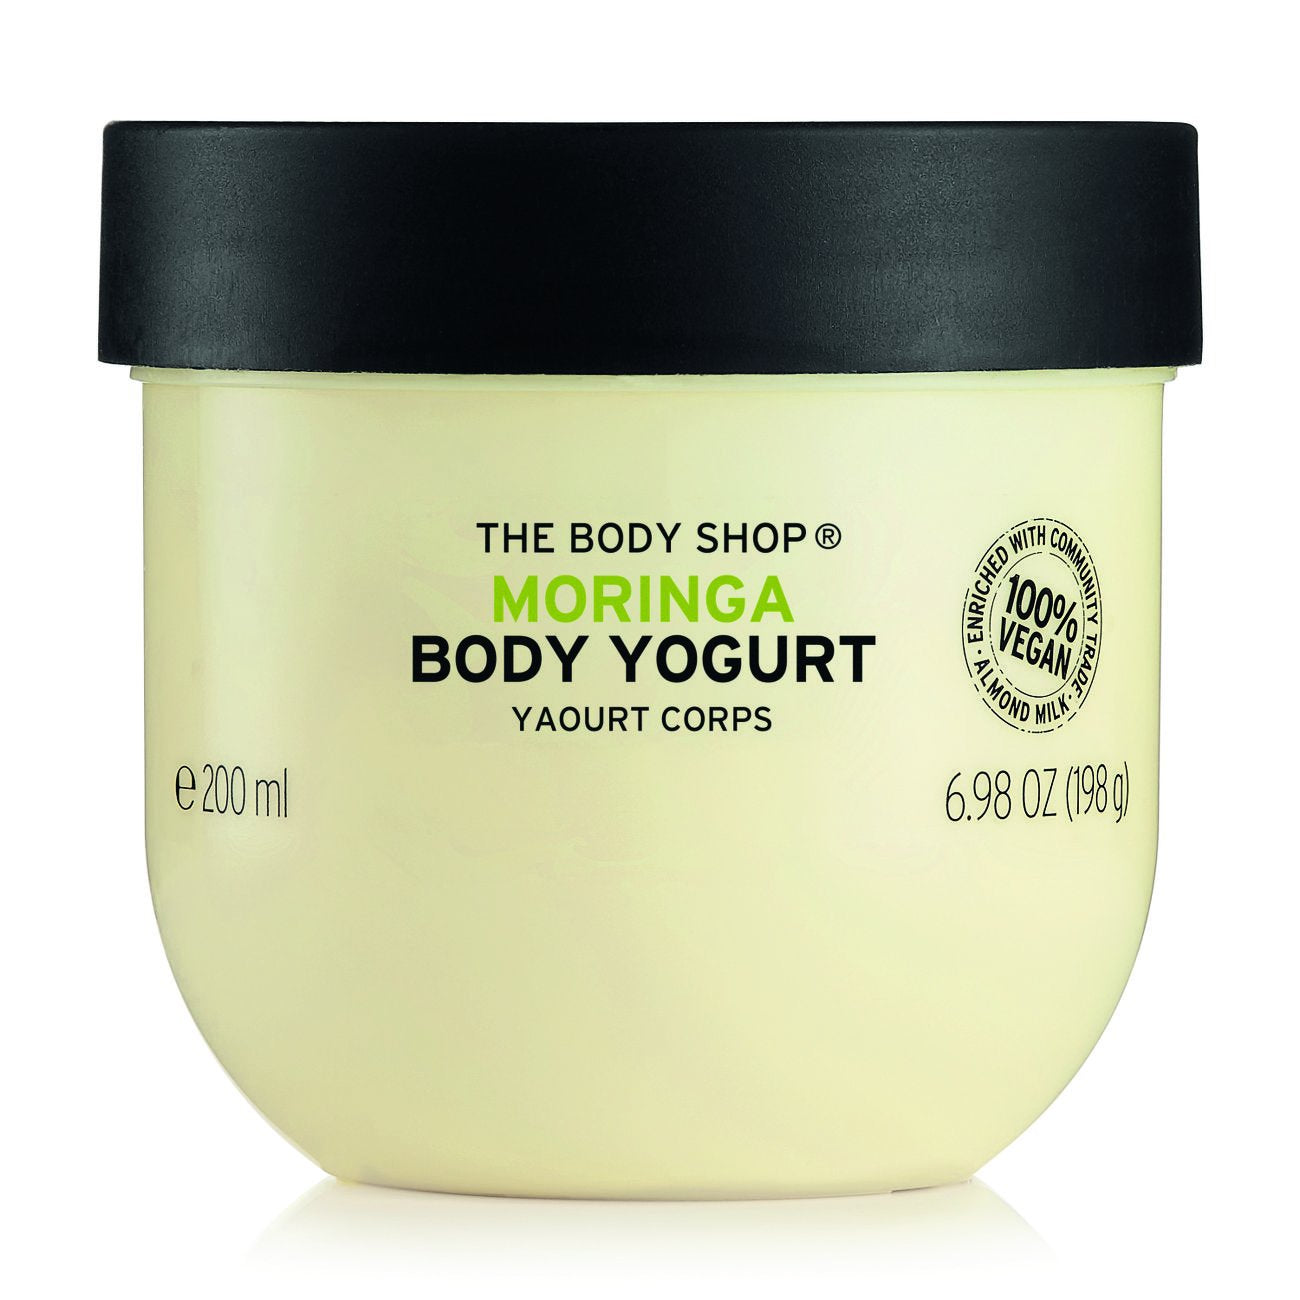 The Body Shop Vegan Body Yogurt Moringa Cream, 200ml  from The Body Shop